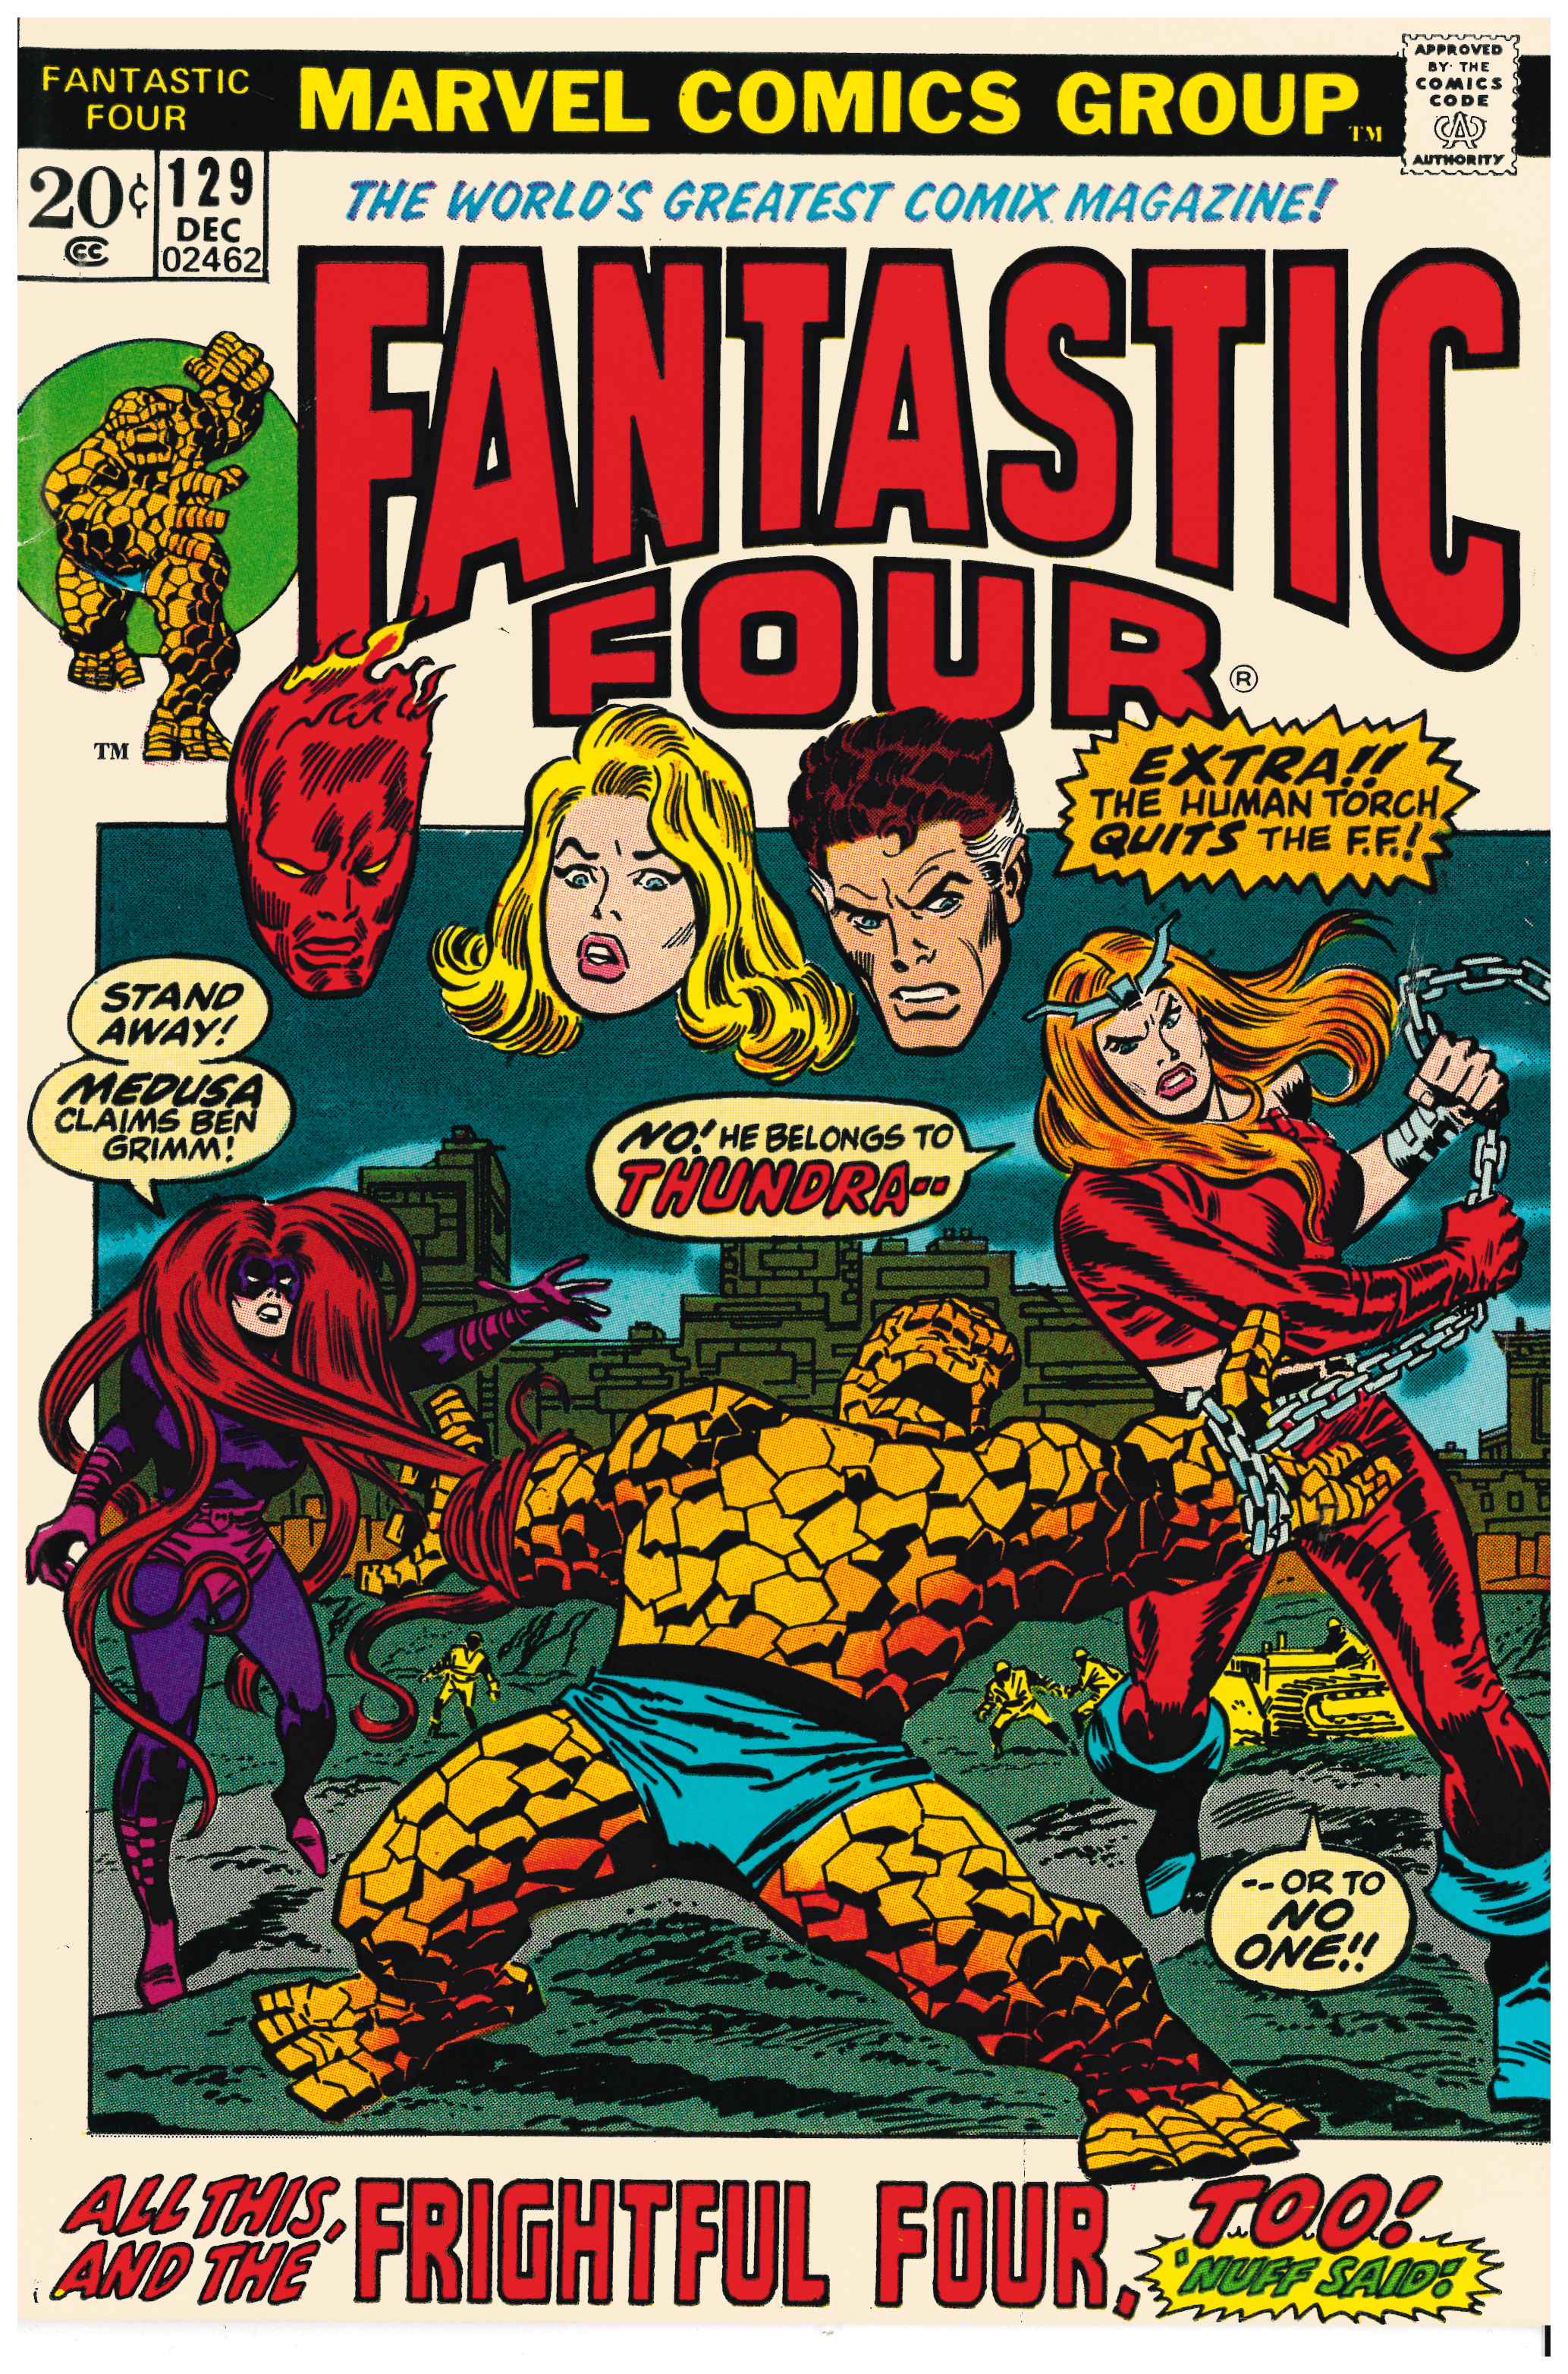 Fantastic Four #129